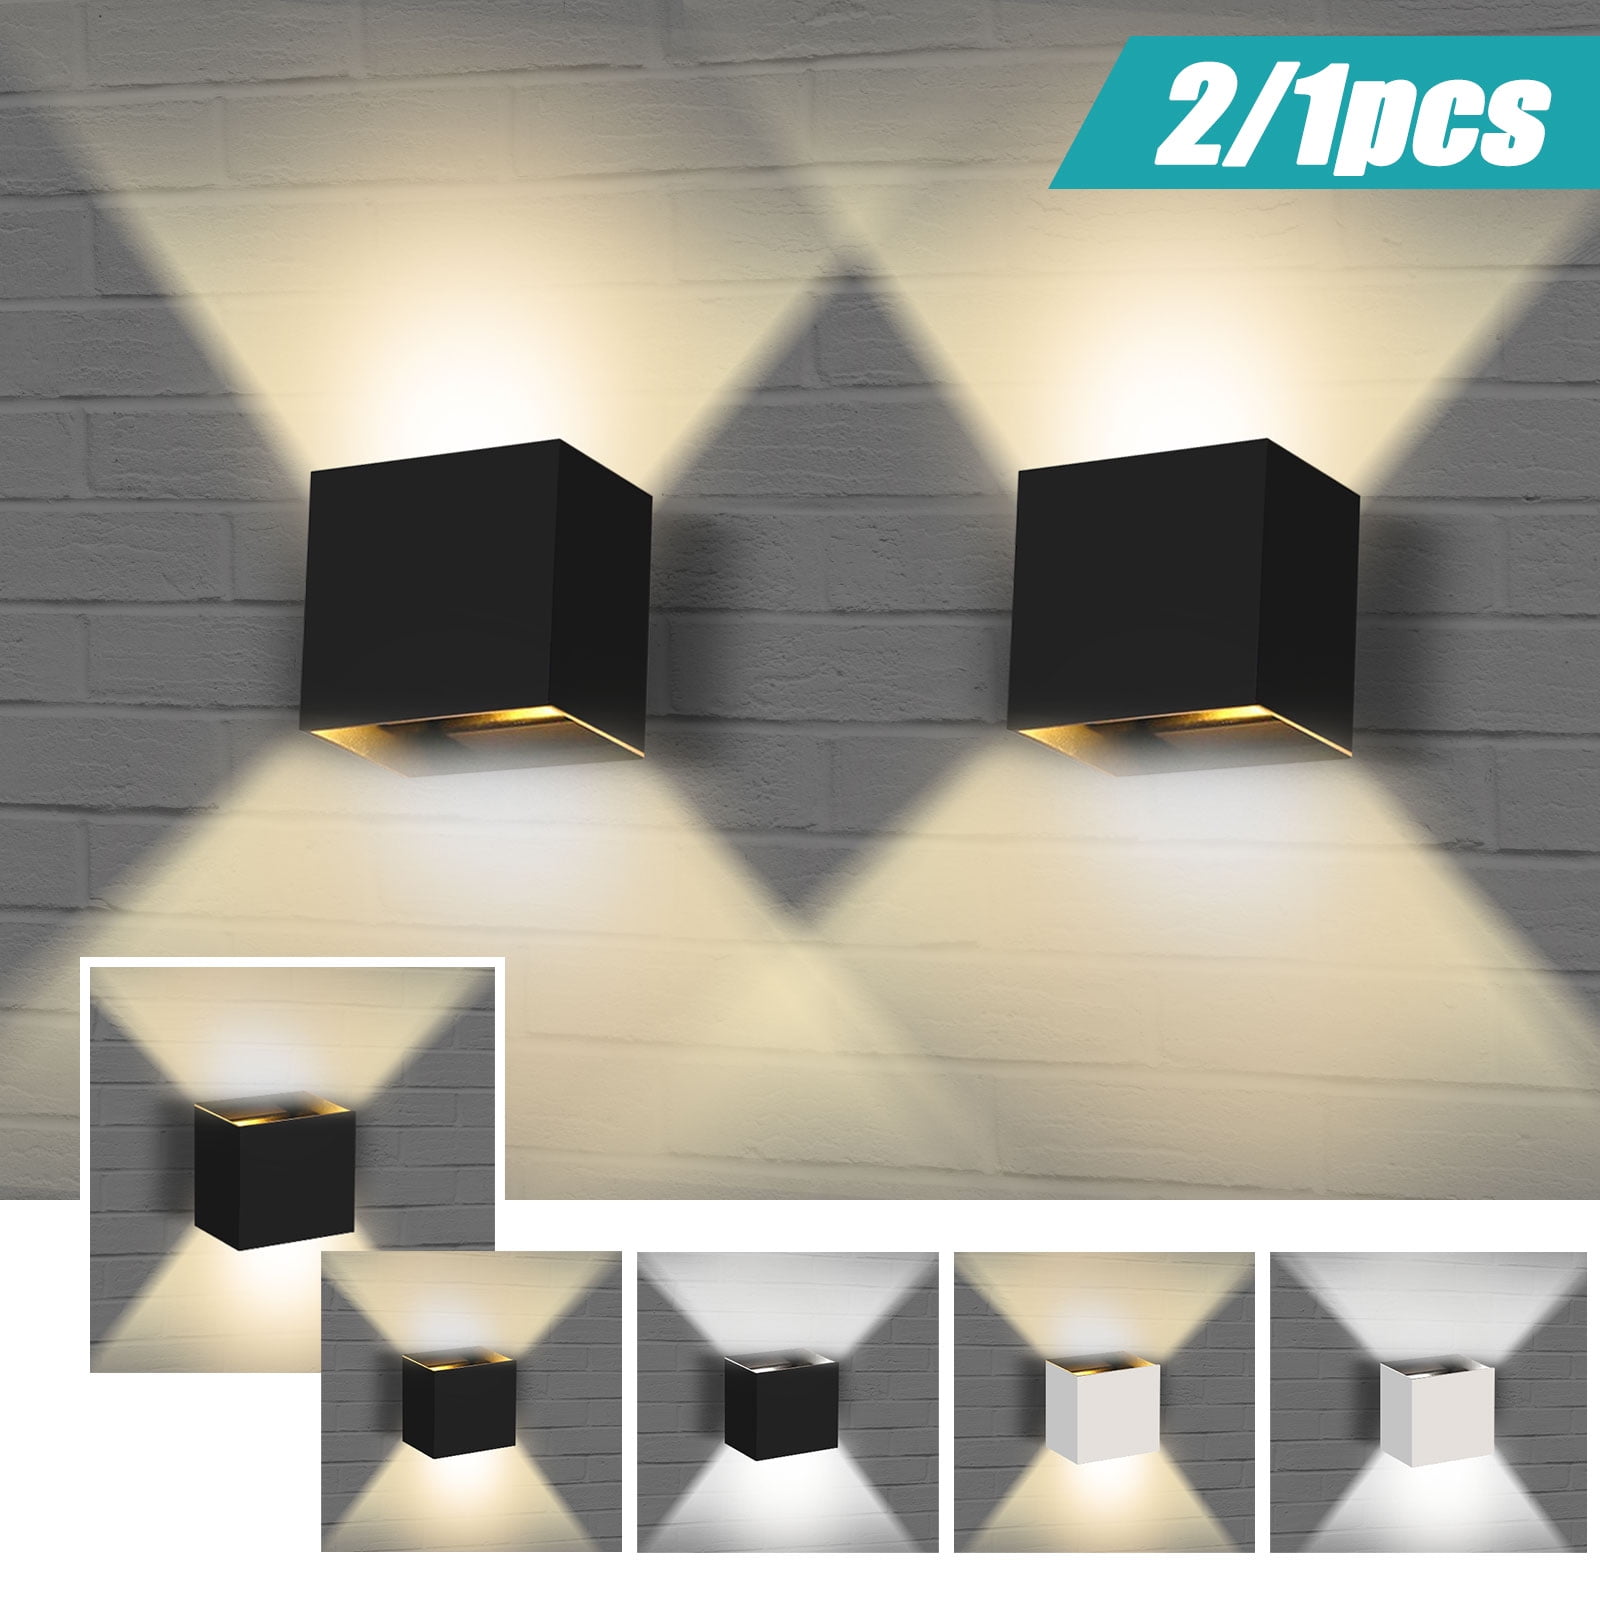 LED Wall Light Modern Up Down Lamp Sconce Spot Lighting Home Bedroom Fixture 